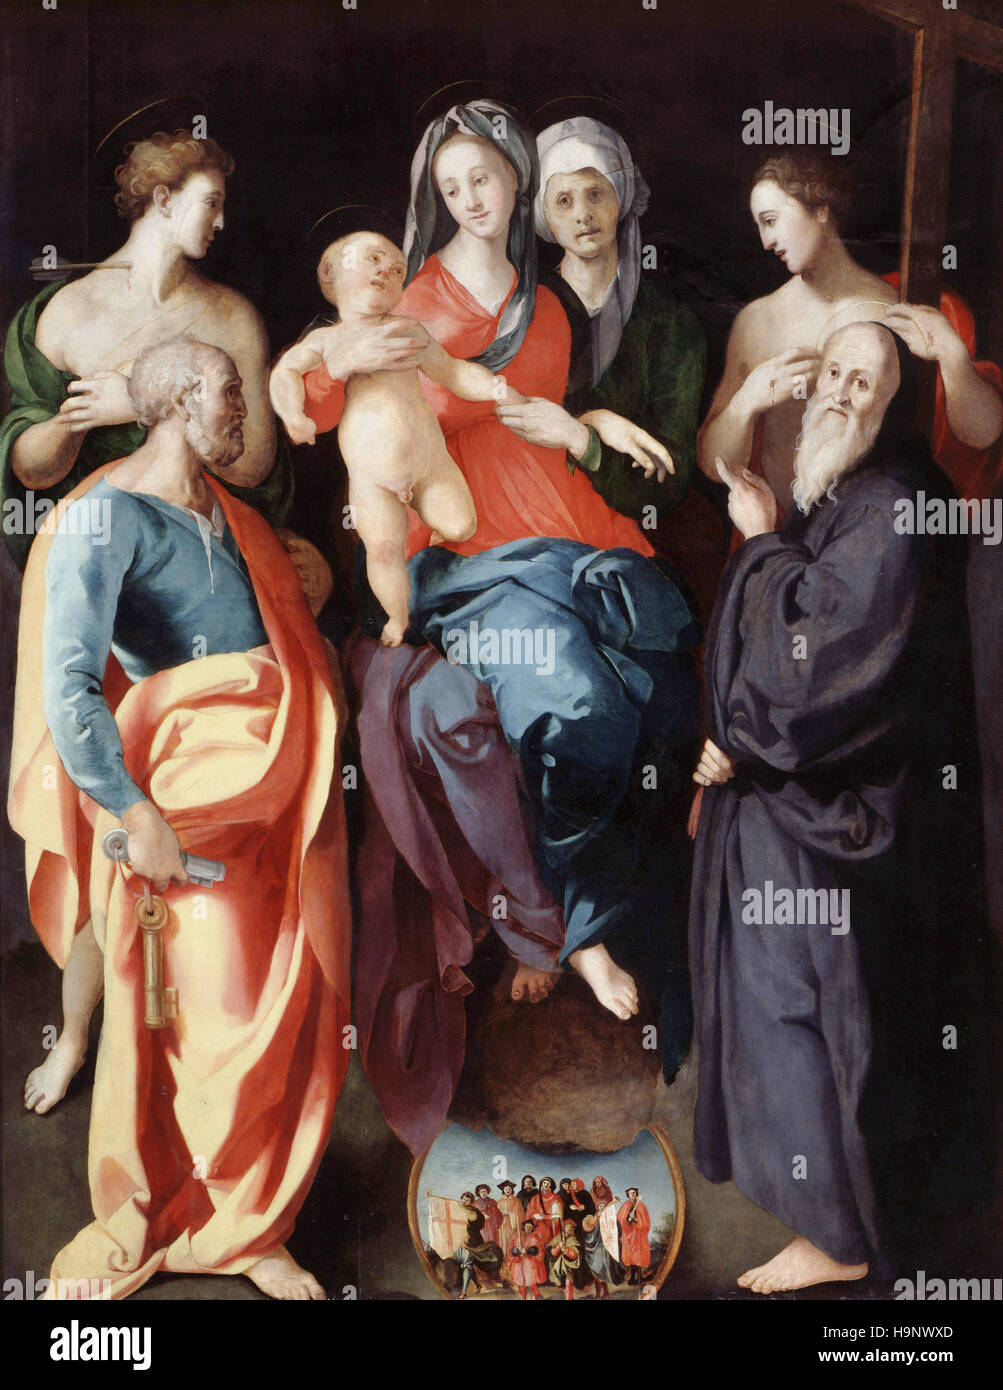 Jacopo da Carucci Jacopo - Pontormo   - The Virgin and Child with Saint Anne and Four Saints - XVI th century -   Louvre museum Paris Stock Photo